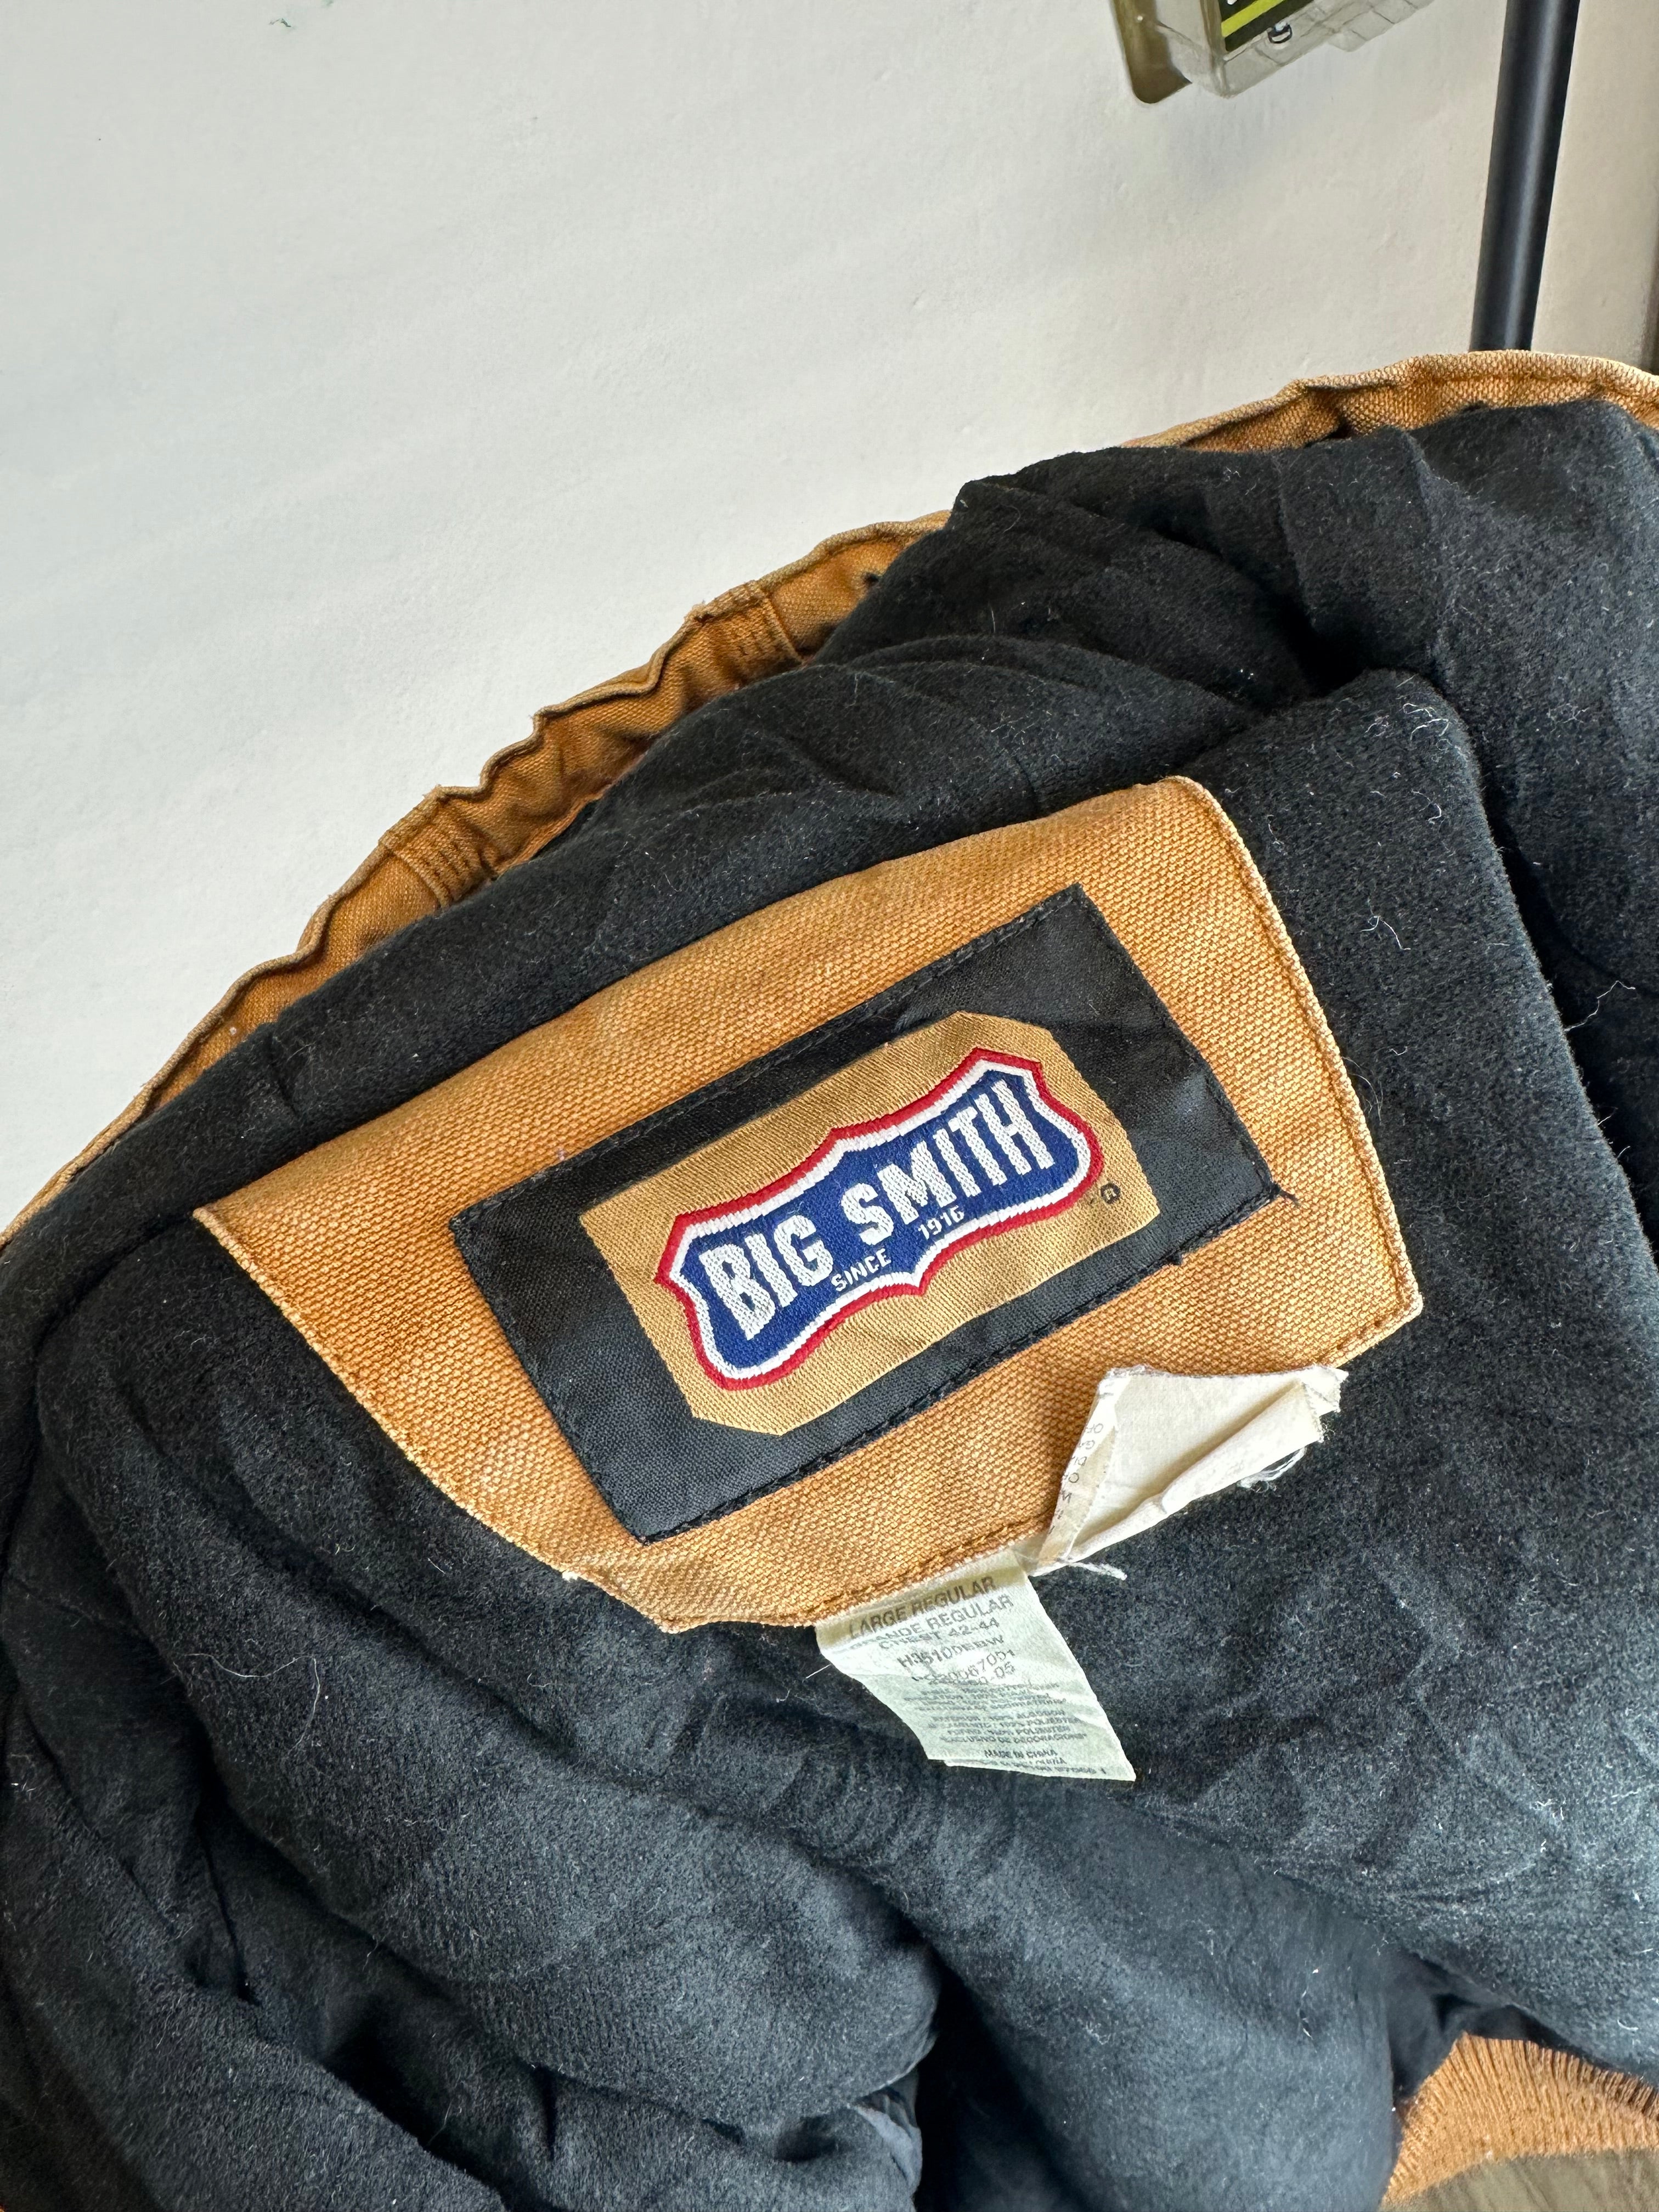 Vintage Big Smith Workwear Jacket - size M